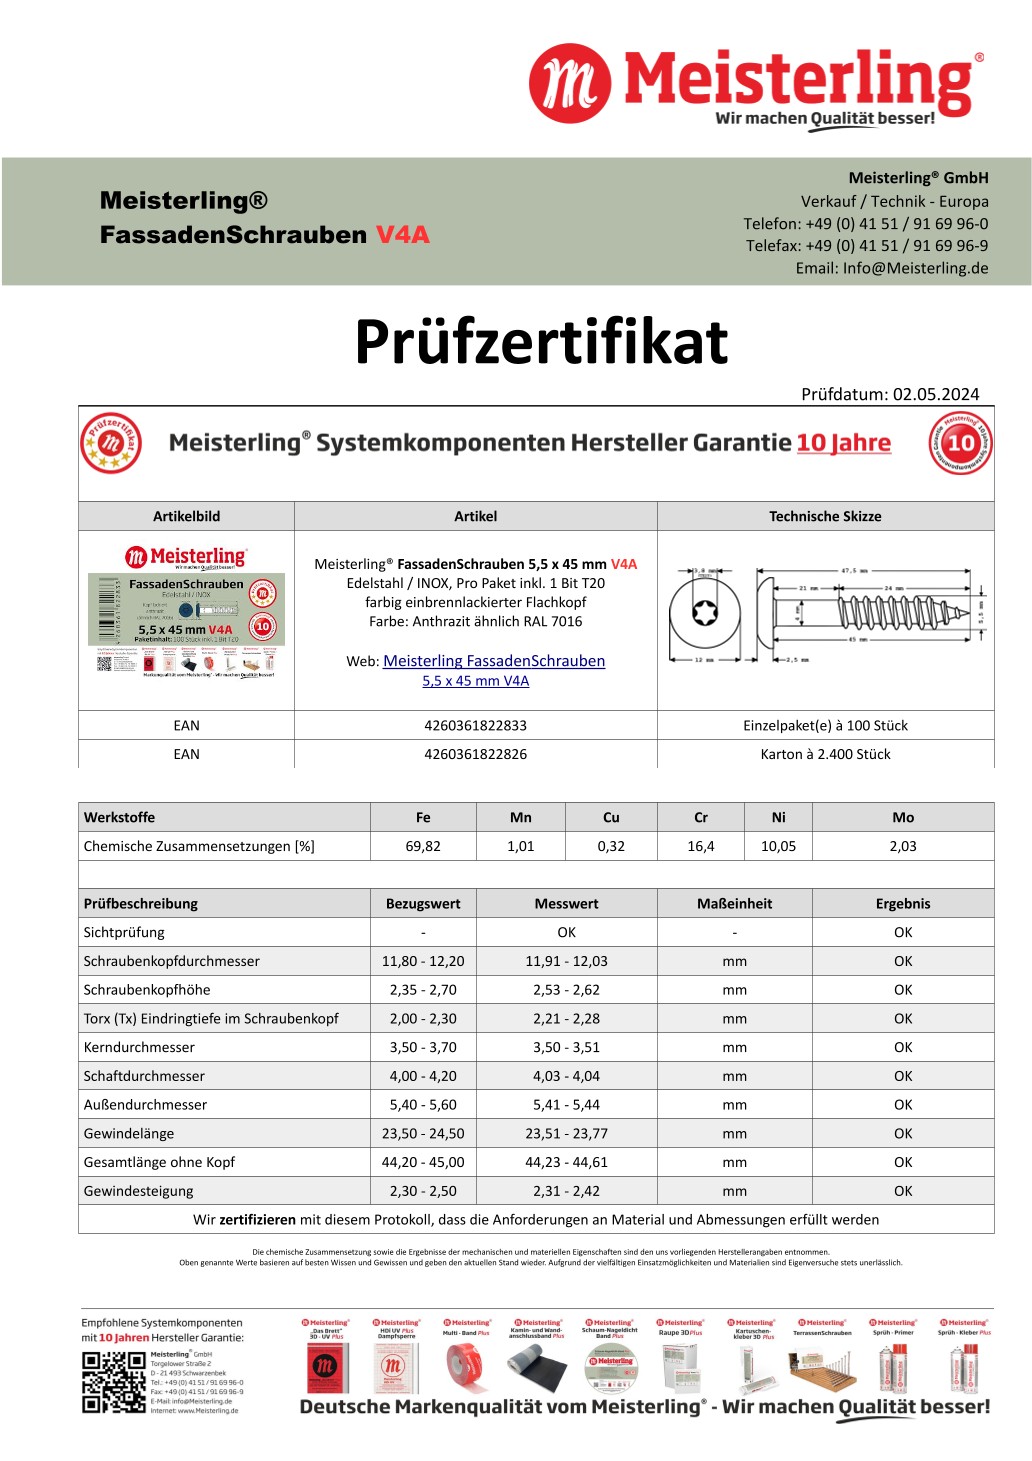 Prüfzertifikat Meisterling® FassadenSchrauben 5,5 x 45 mm V4a anthrazit